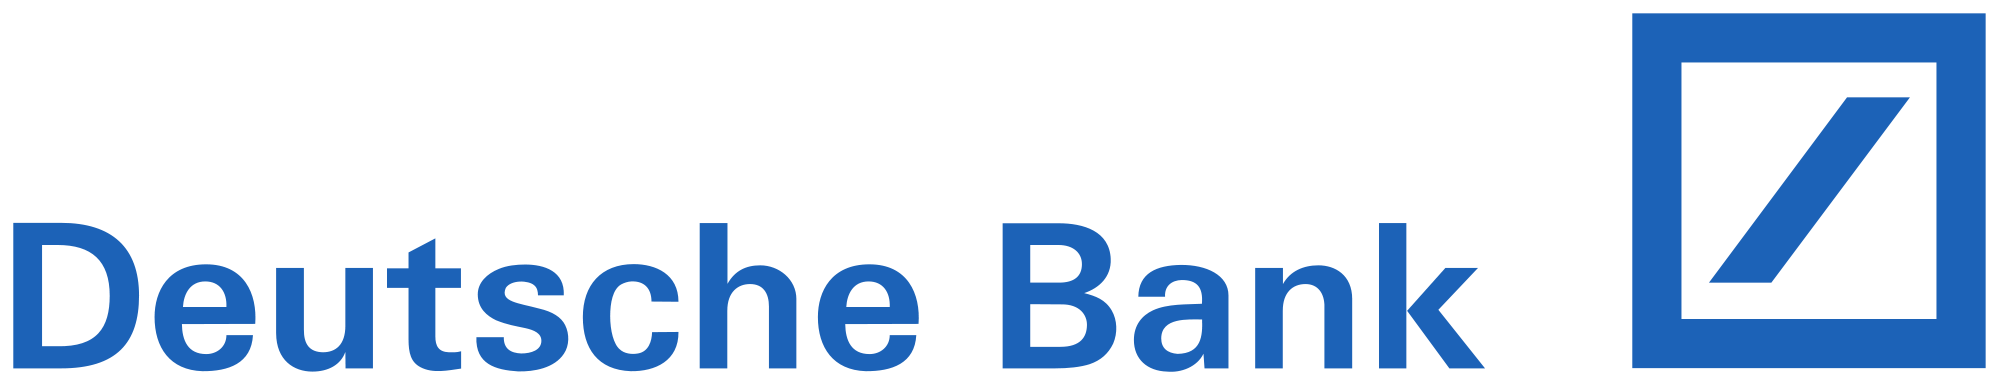 Deutsche Bank (global Transaction Banking Division)